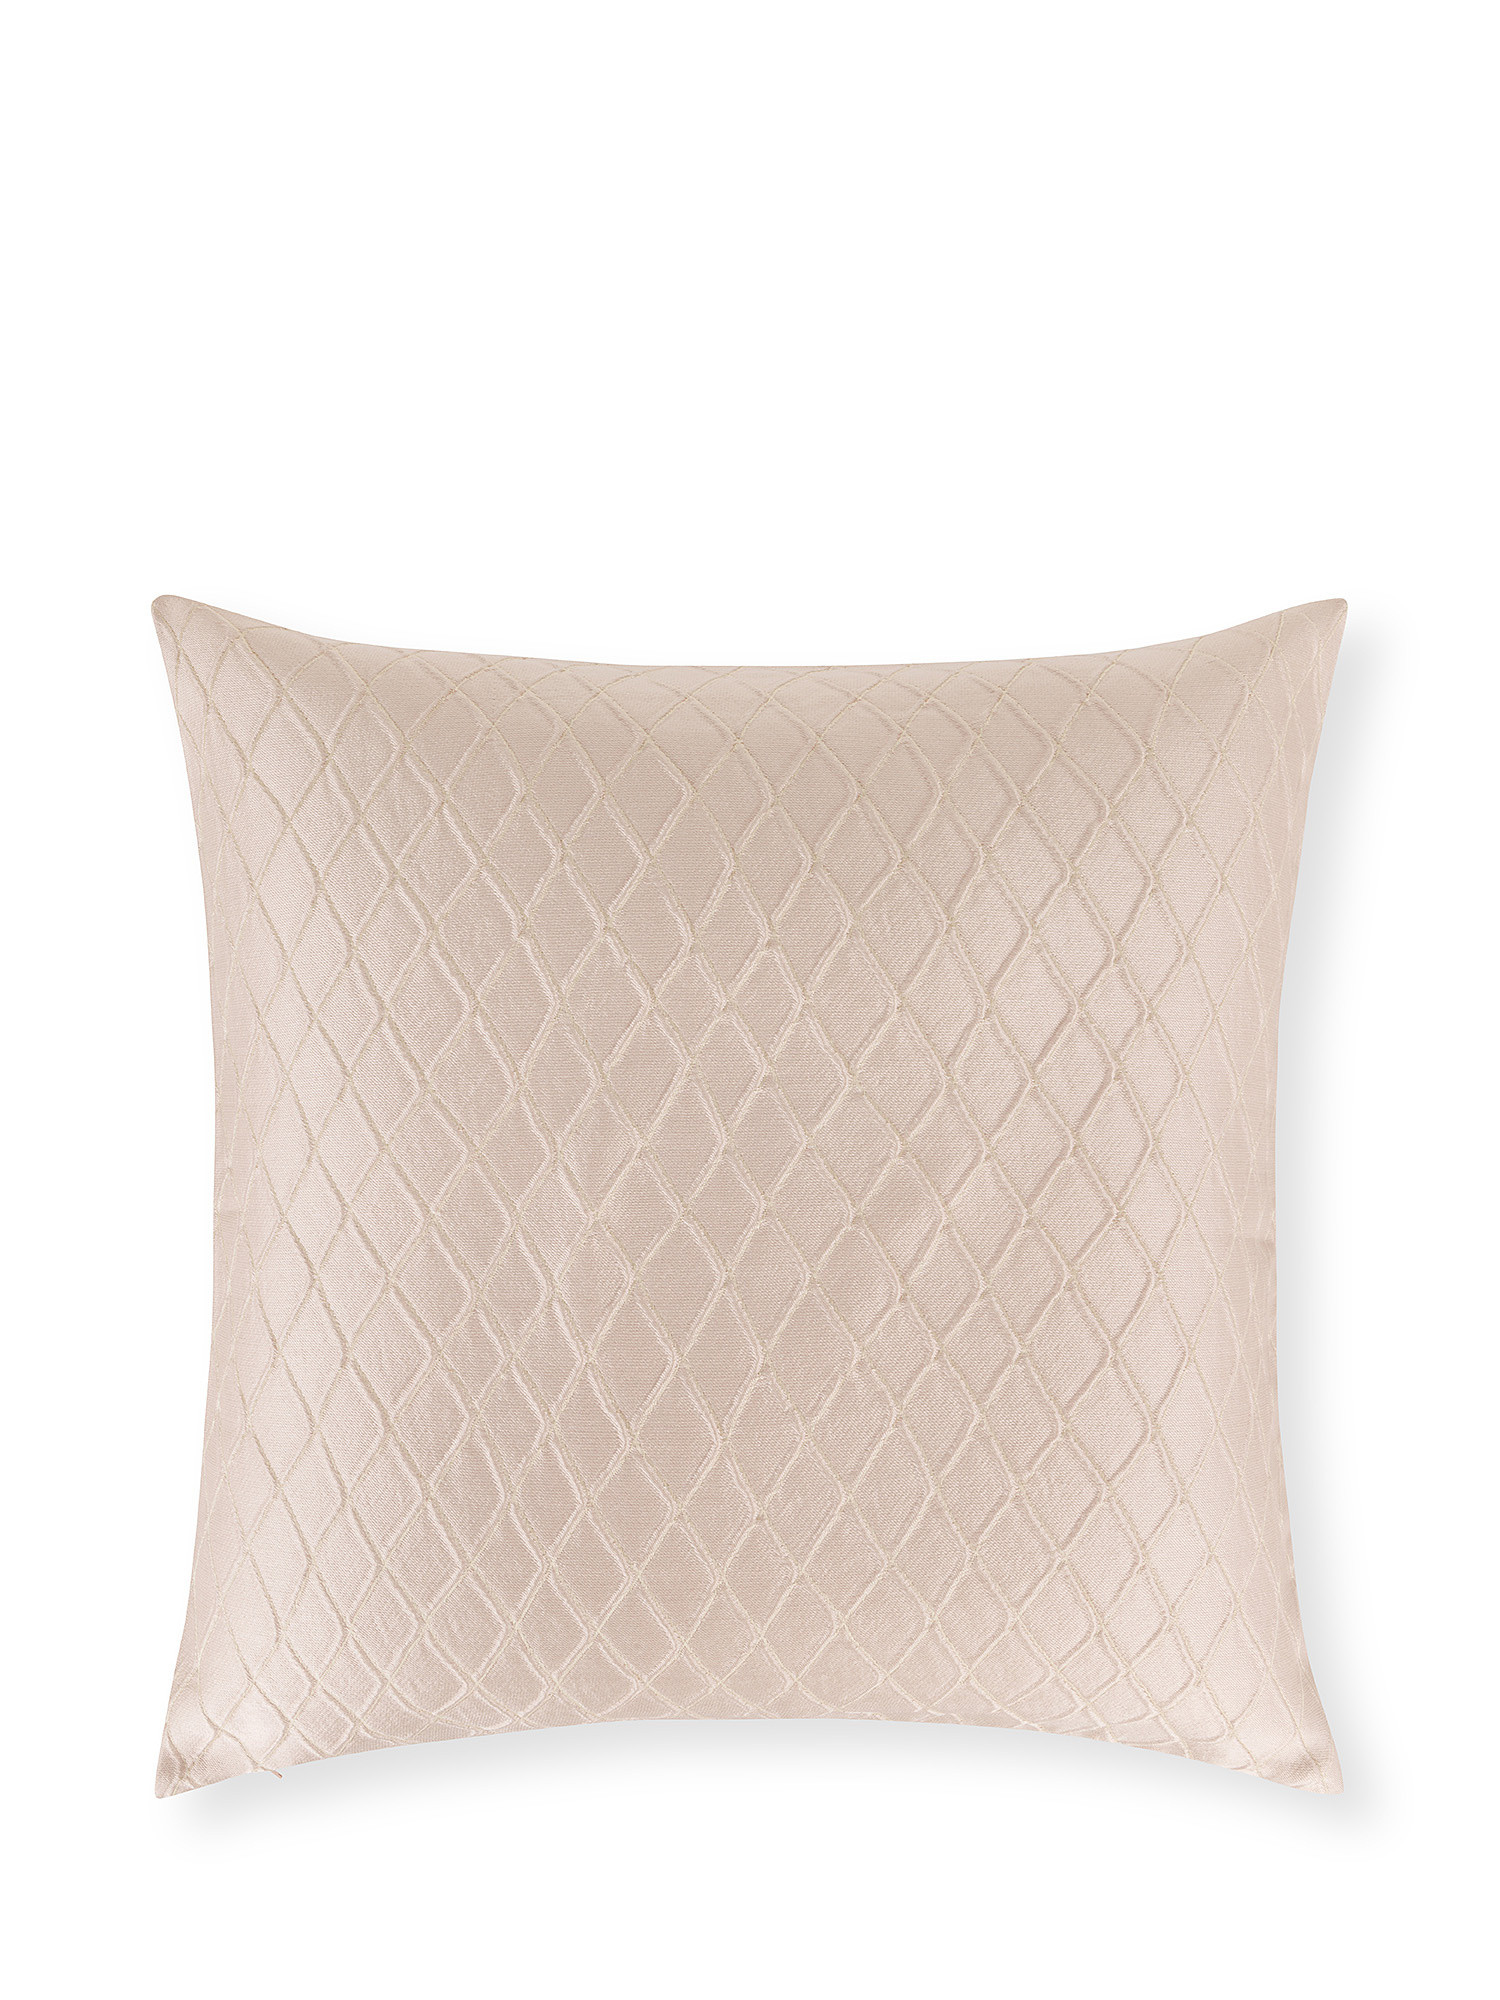 Jacquard cushion with rhombus motif 45x45cm, Pink, large image number 0